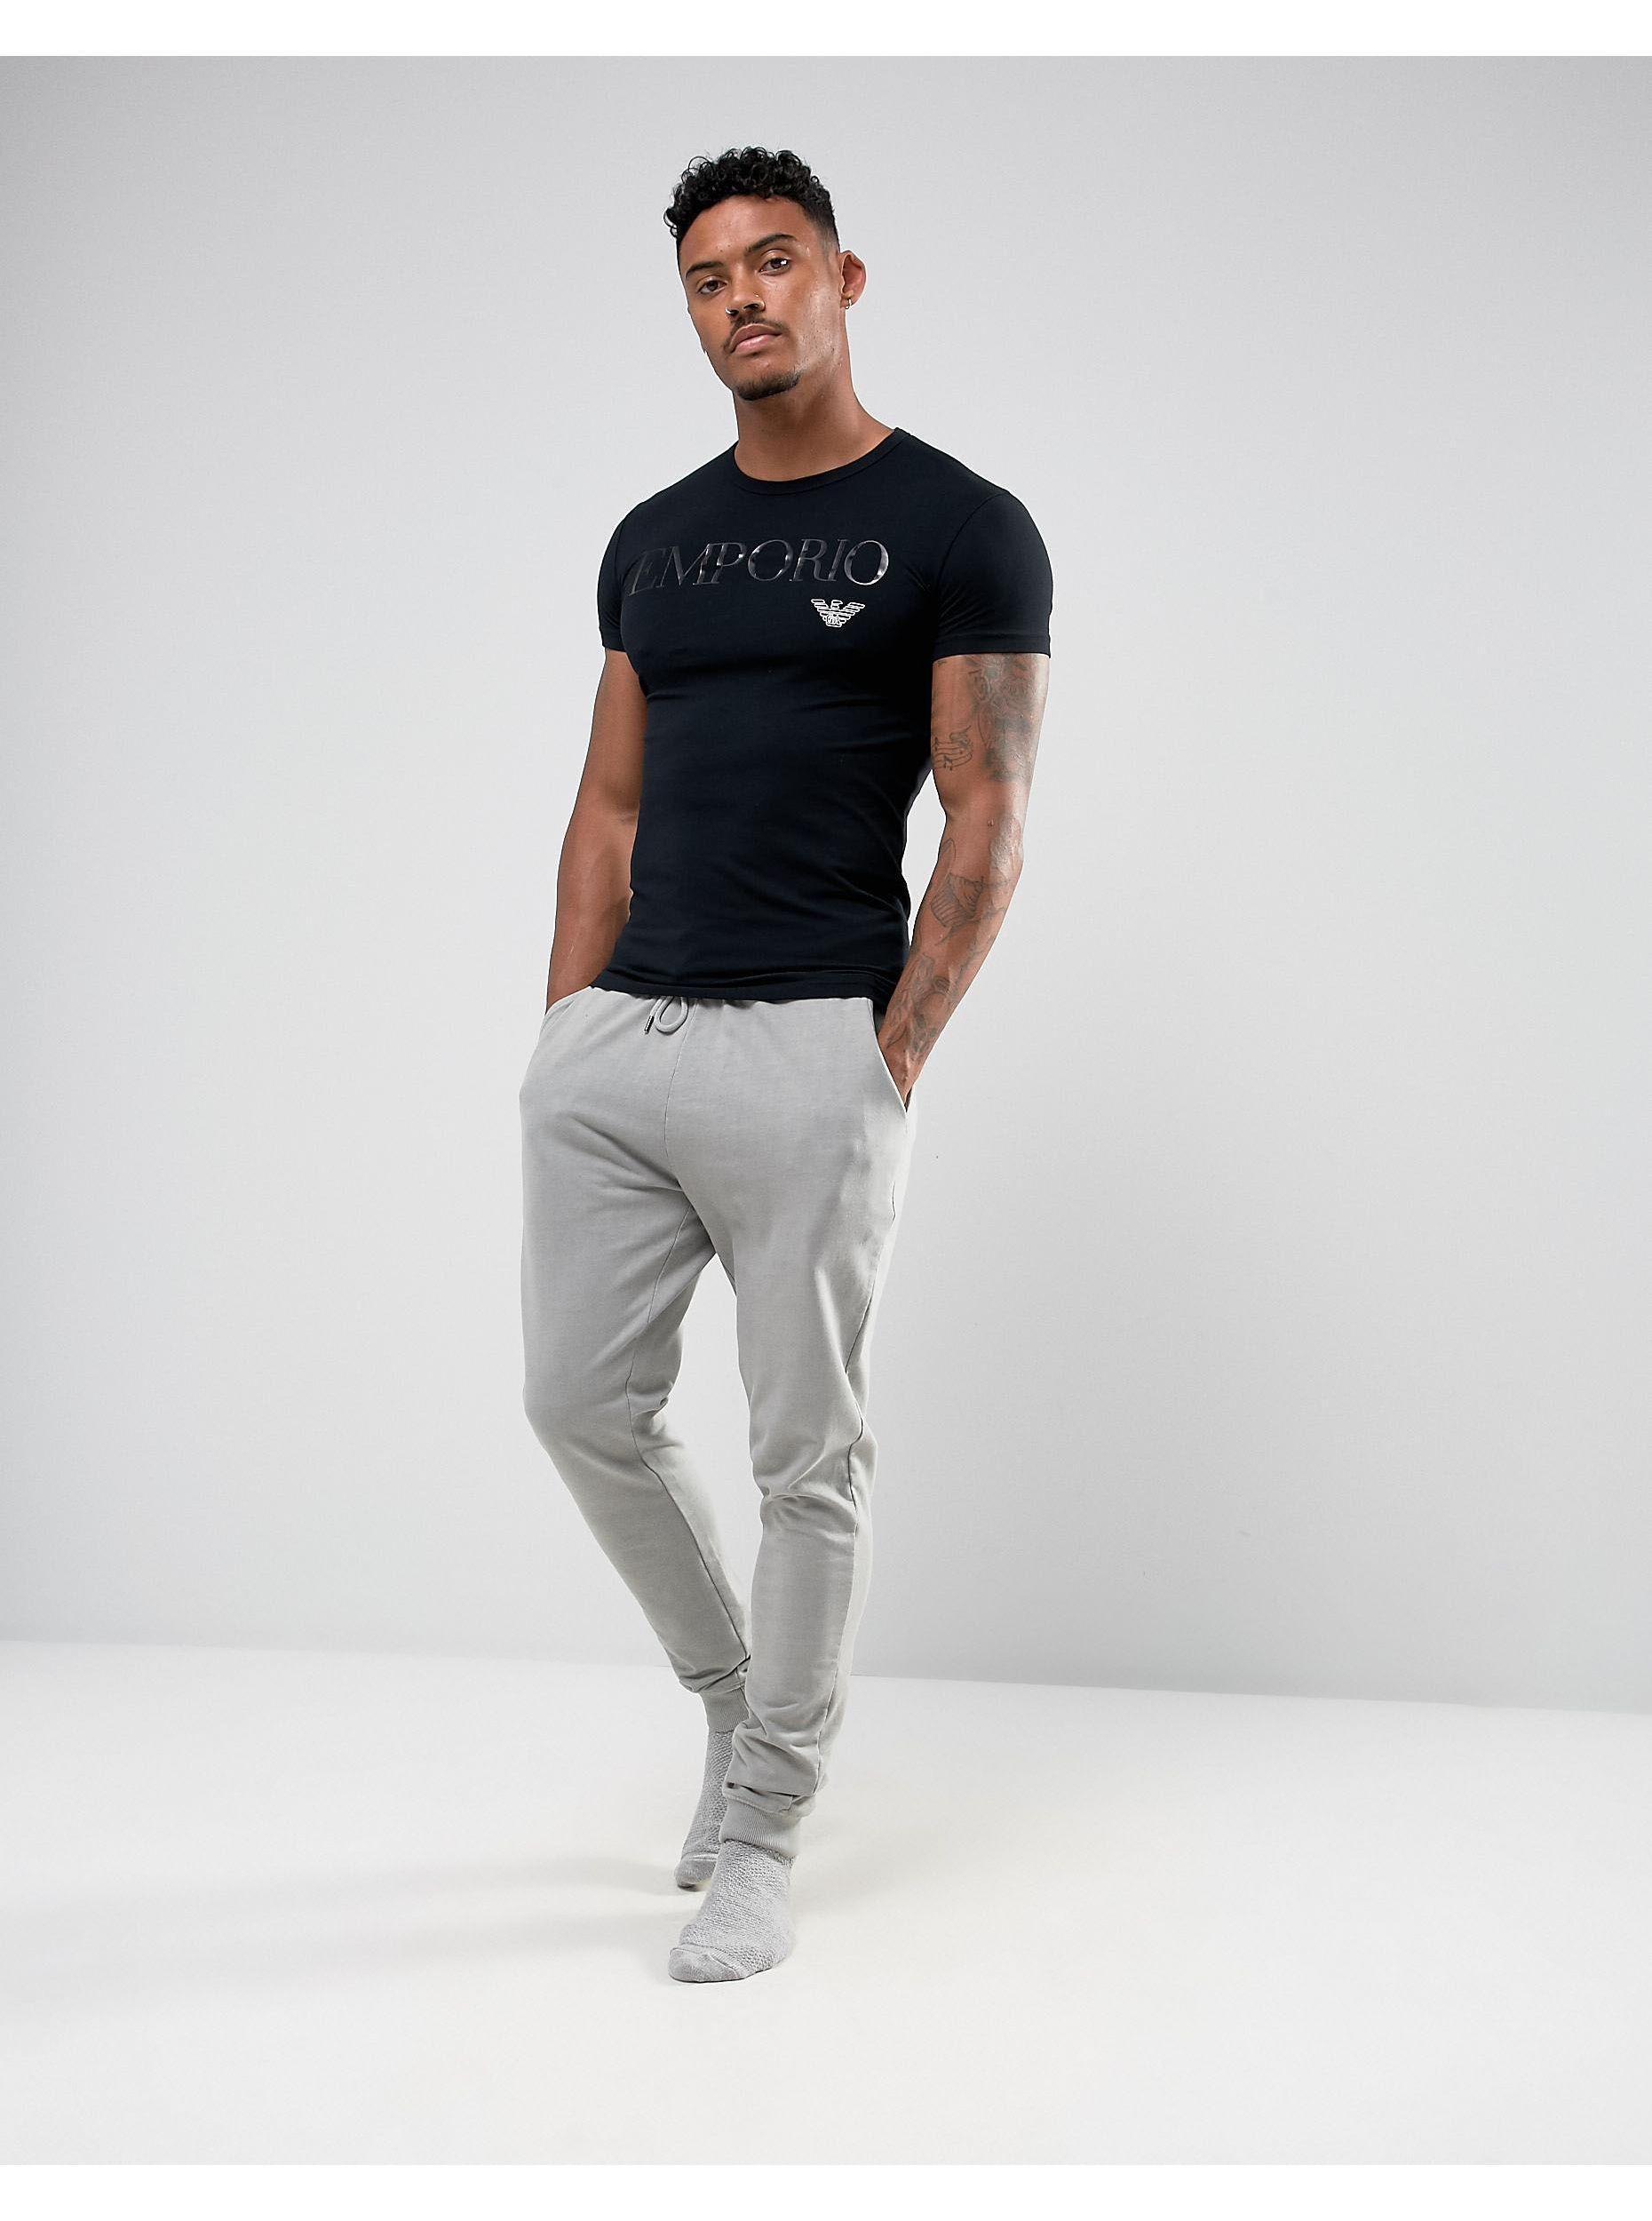 Emporio Armani Loungewear Text Logo Lounge T-shirt in Black for Men | Lyst